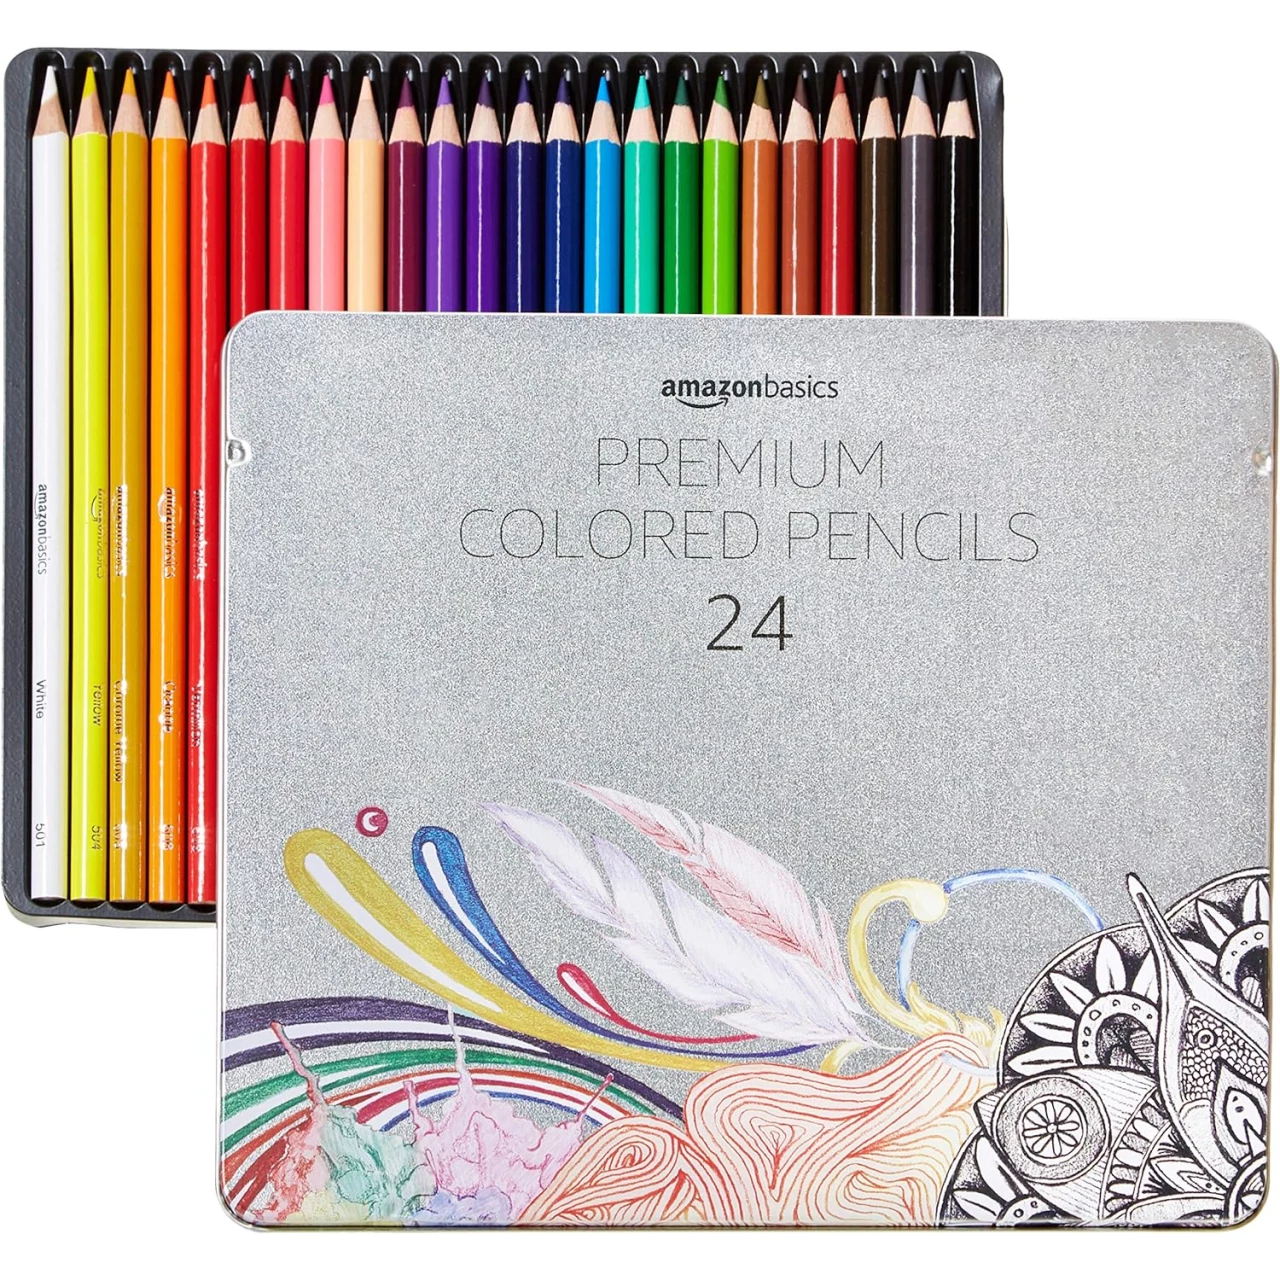 Amazon Basics Premium Colored Pencils, Soft Core, 24 Count, Pack of 1, Multicolor